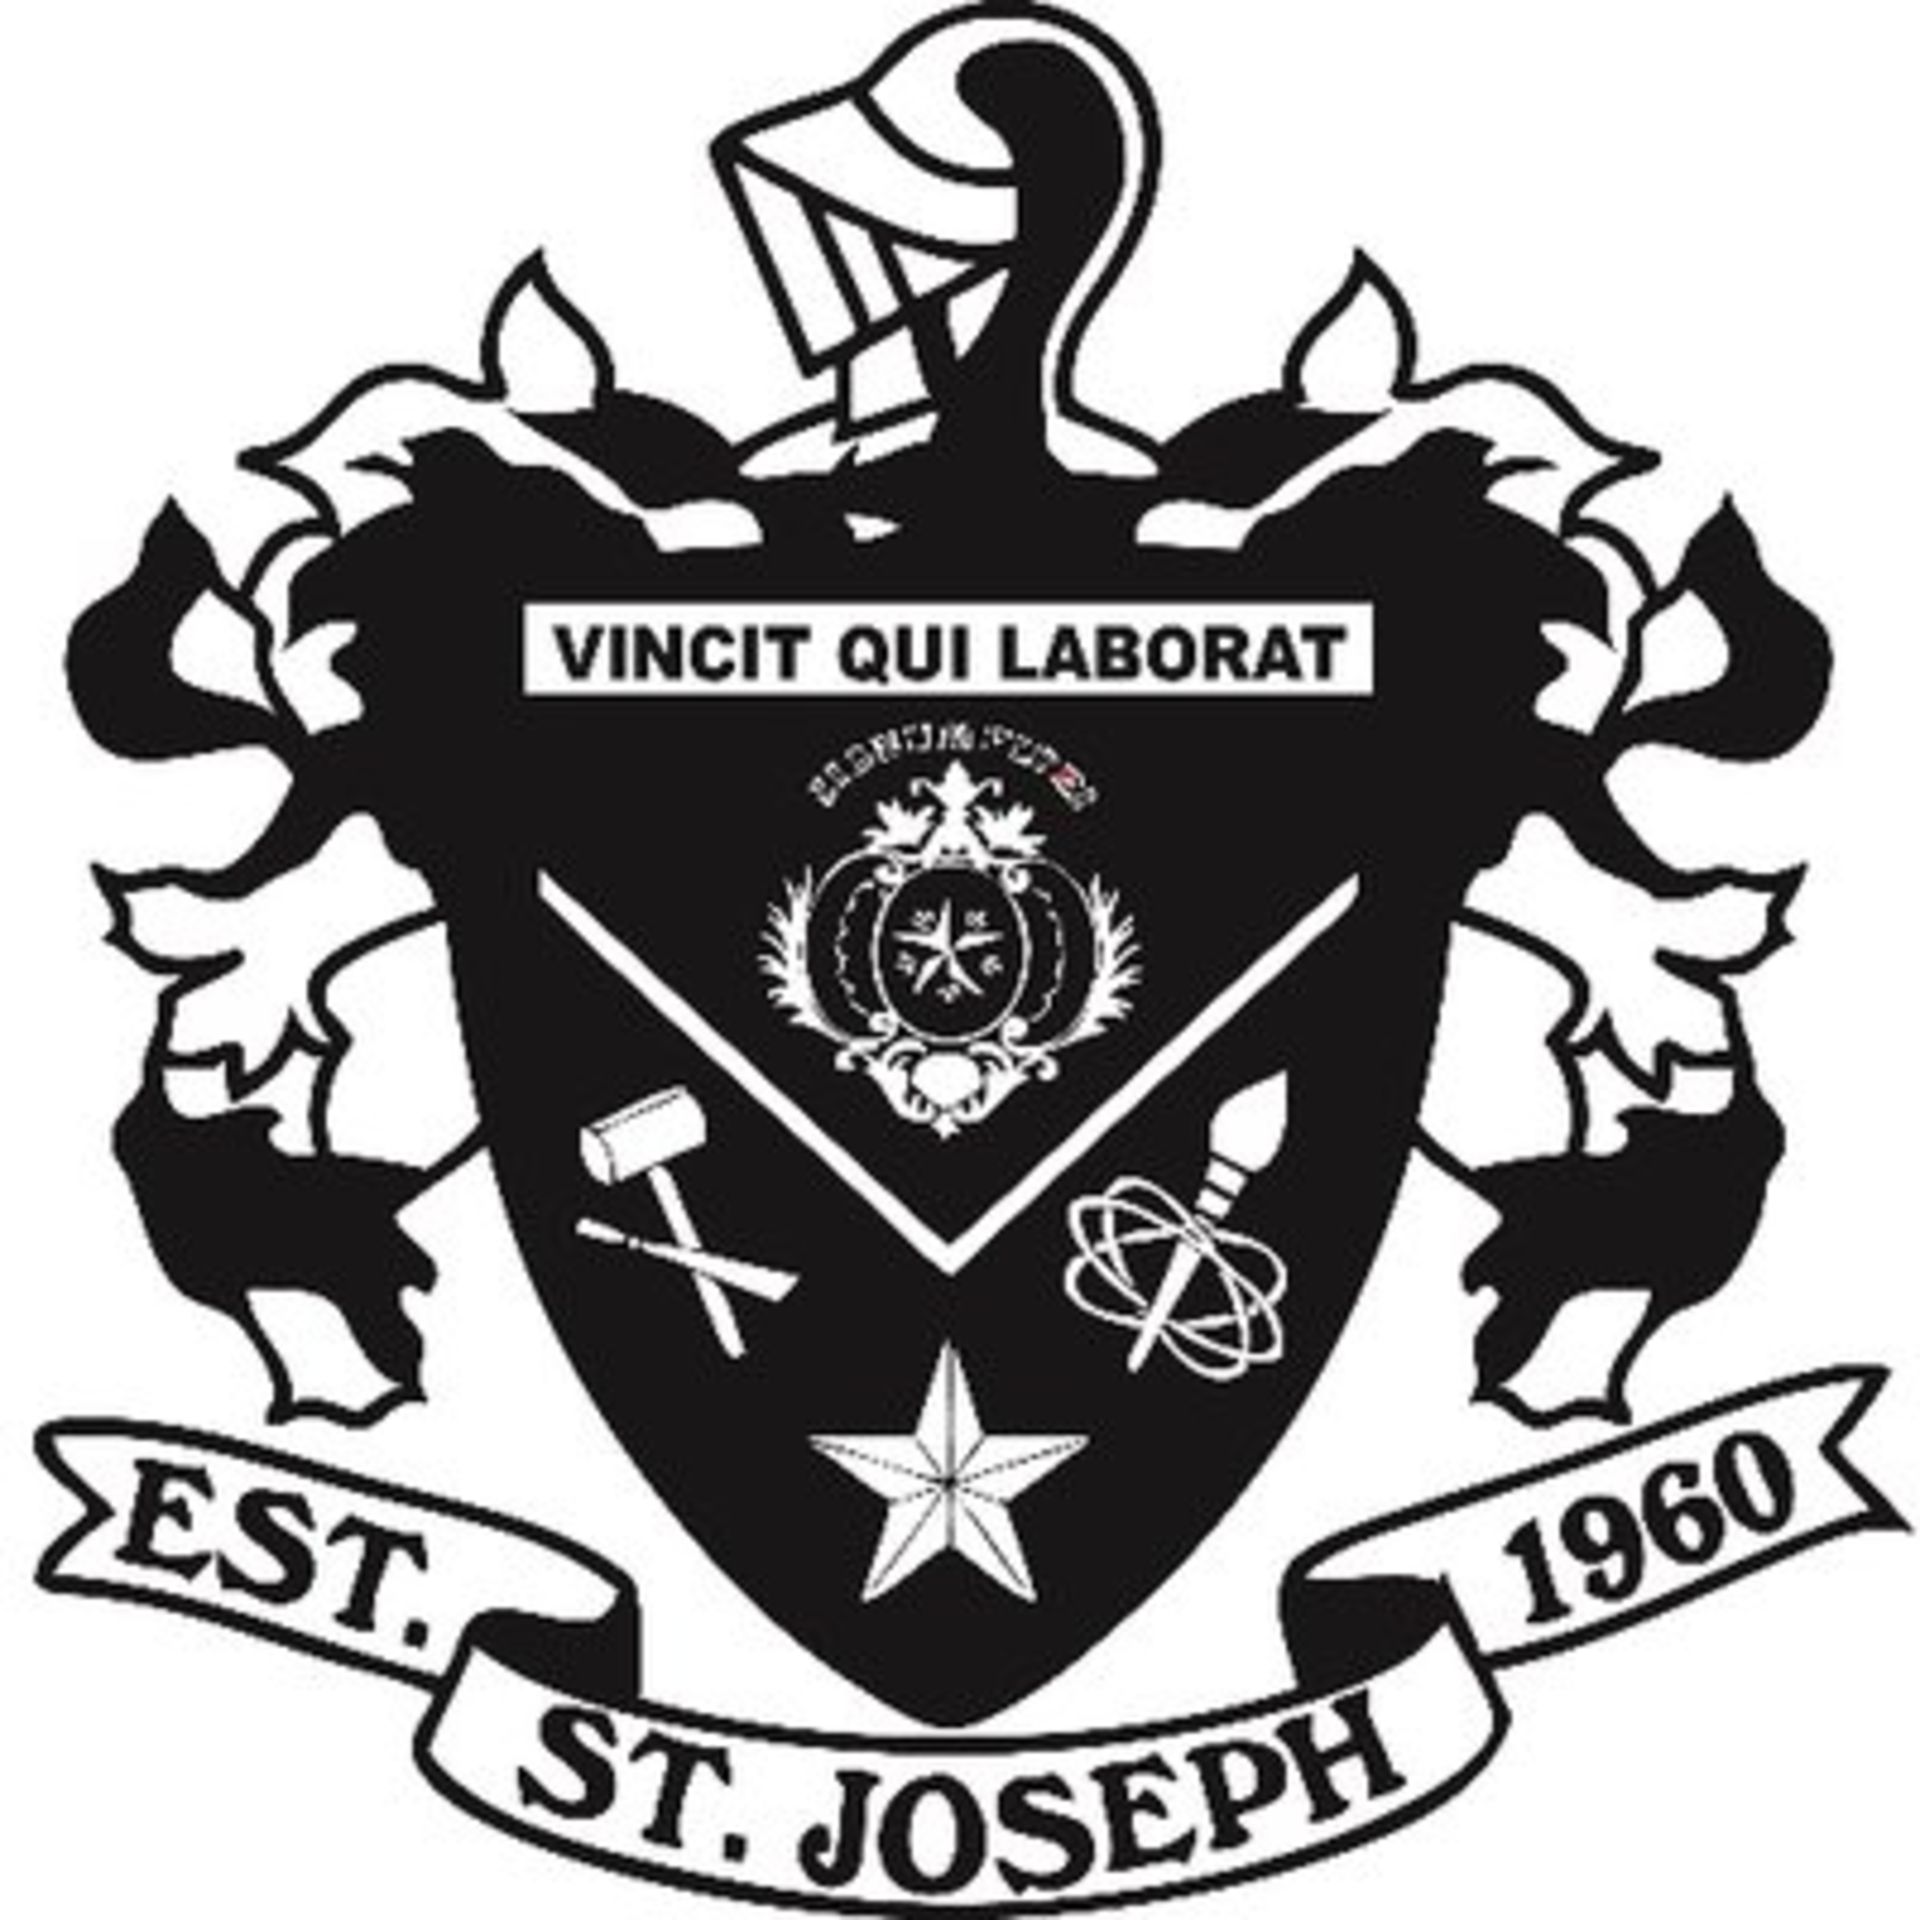 St. Joseph High School Academic Assets, Athletic Equipment, and Memorabilia Timed Online